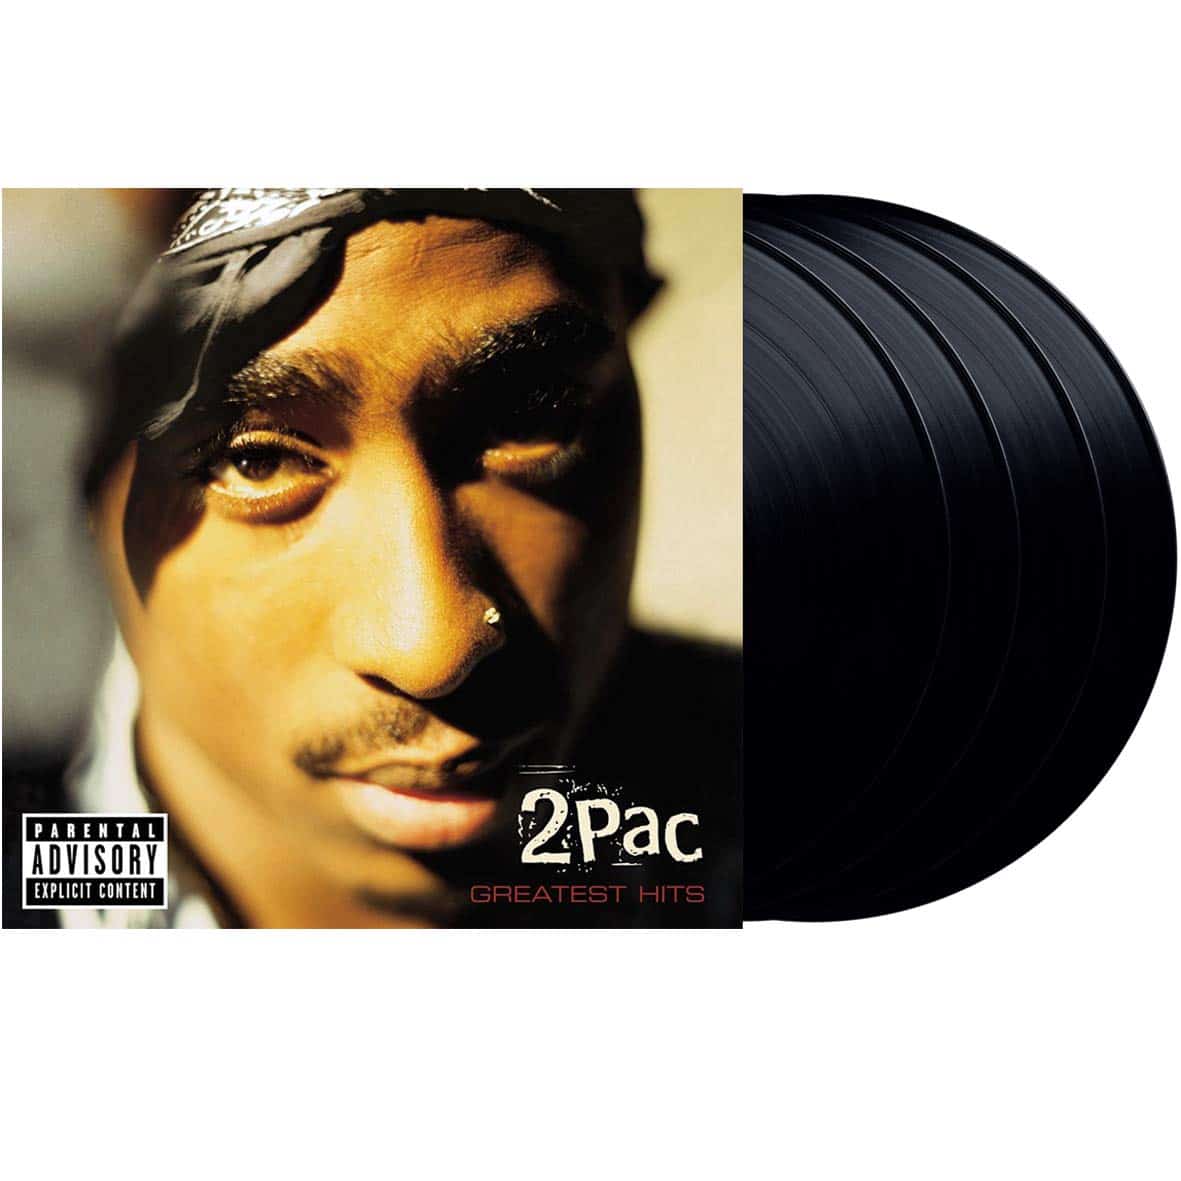 2Pac-Greatest-Hits-4-LP-vinyl-record-album-front